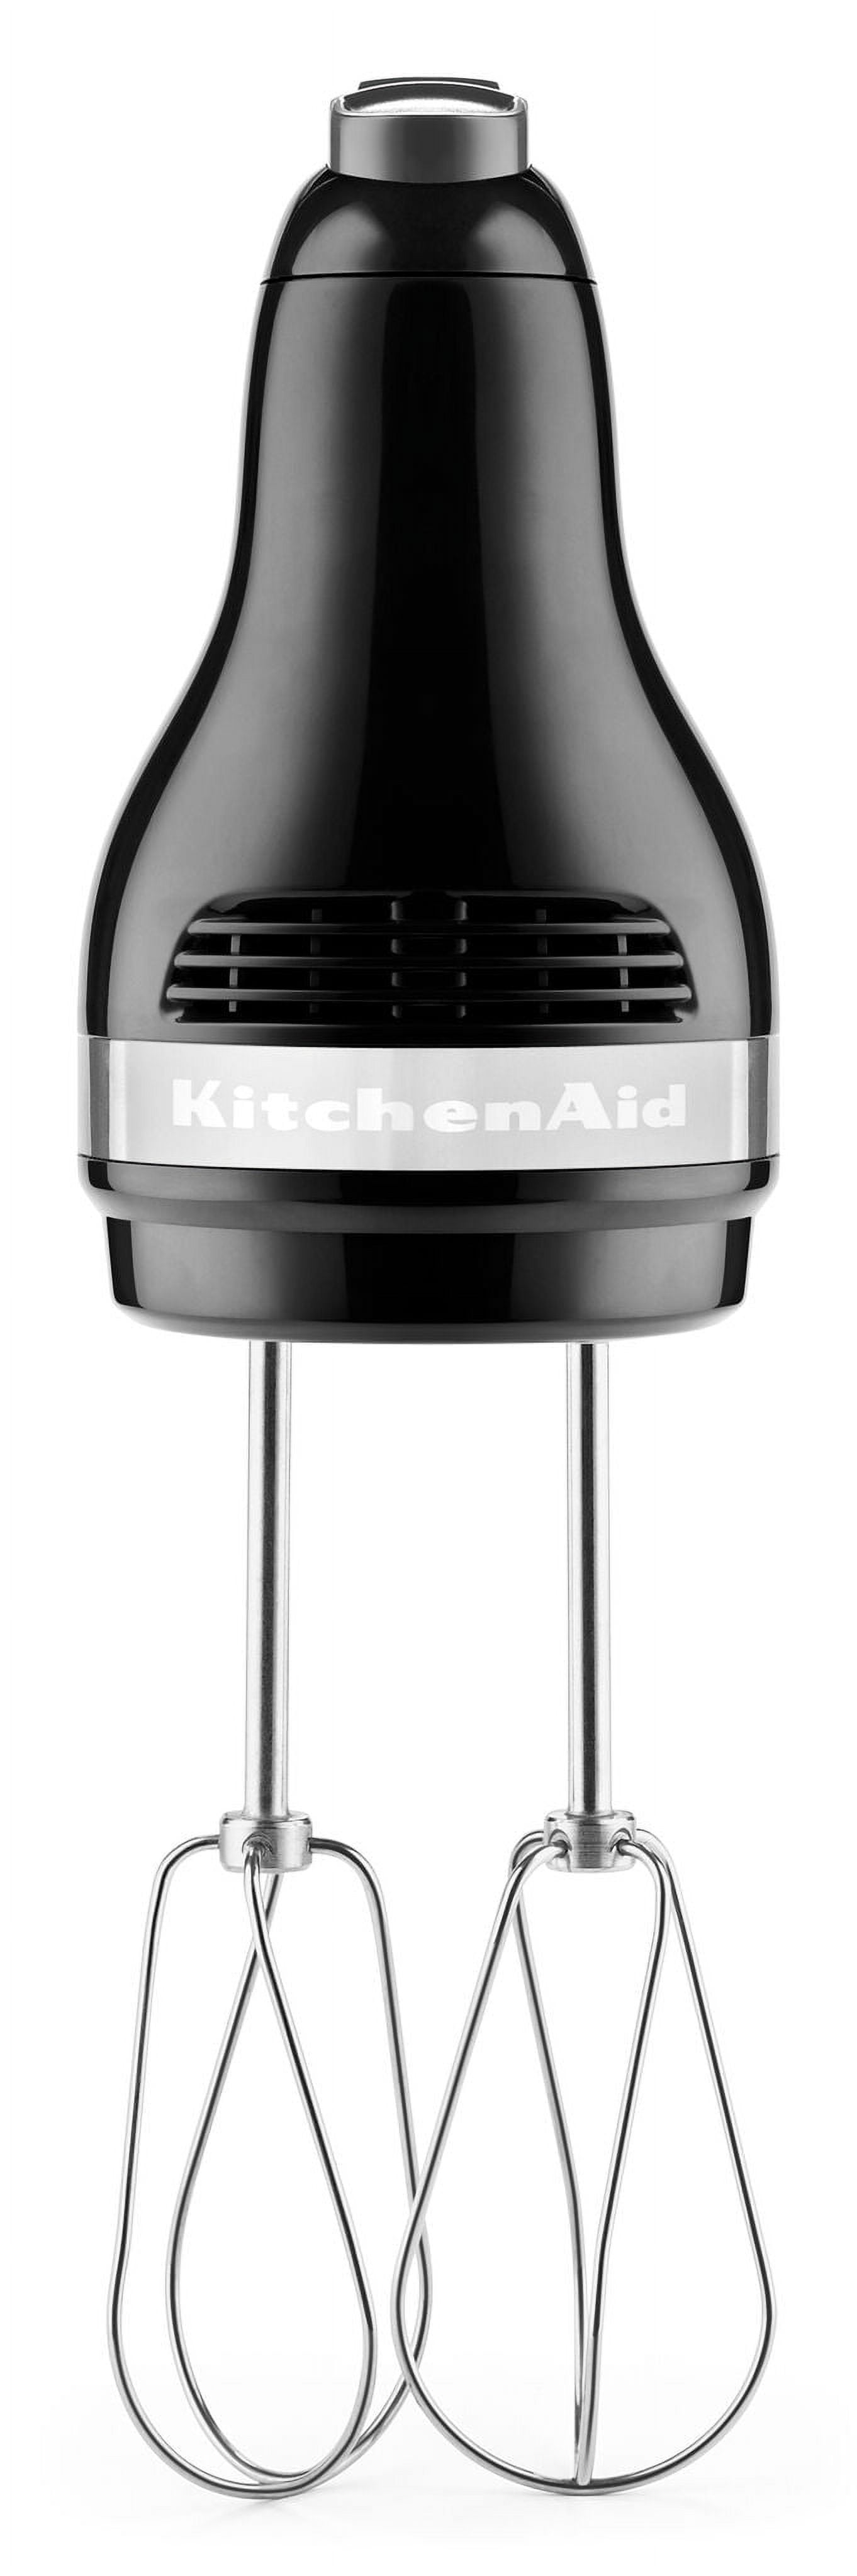 KitchenAid 5-Speed Ultra Power Hand Mixer, Black - Shop Blenders & Mixers  at H-E-B